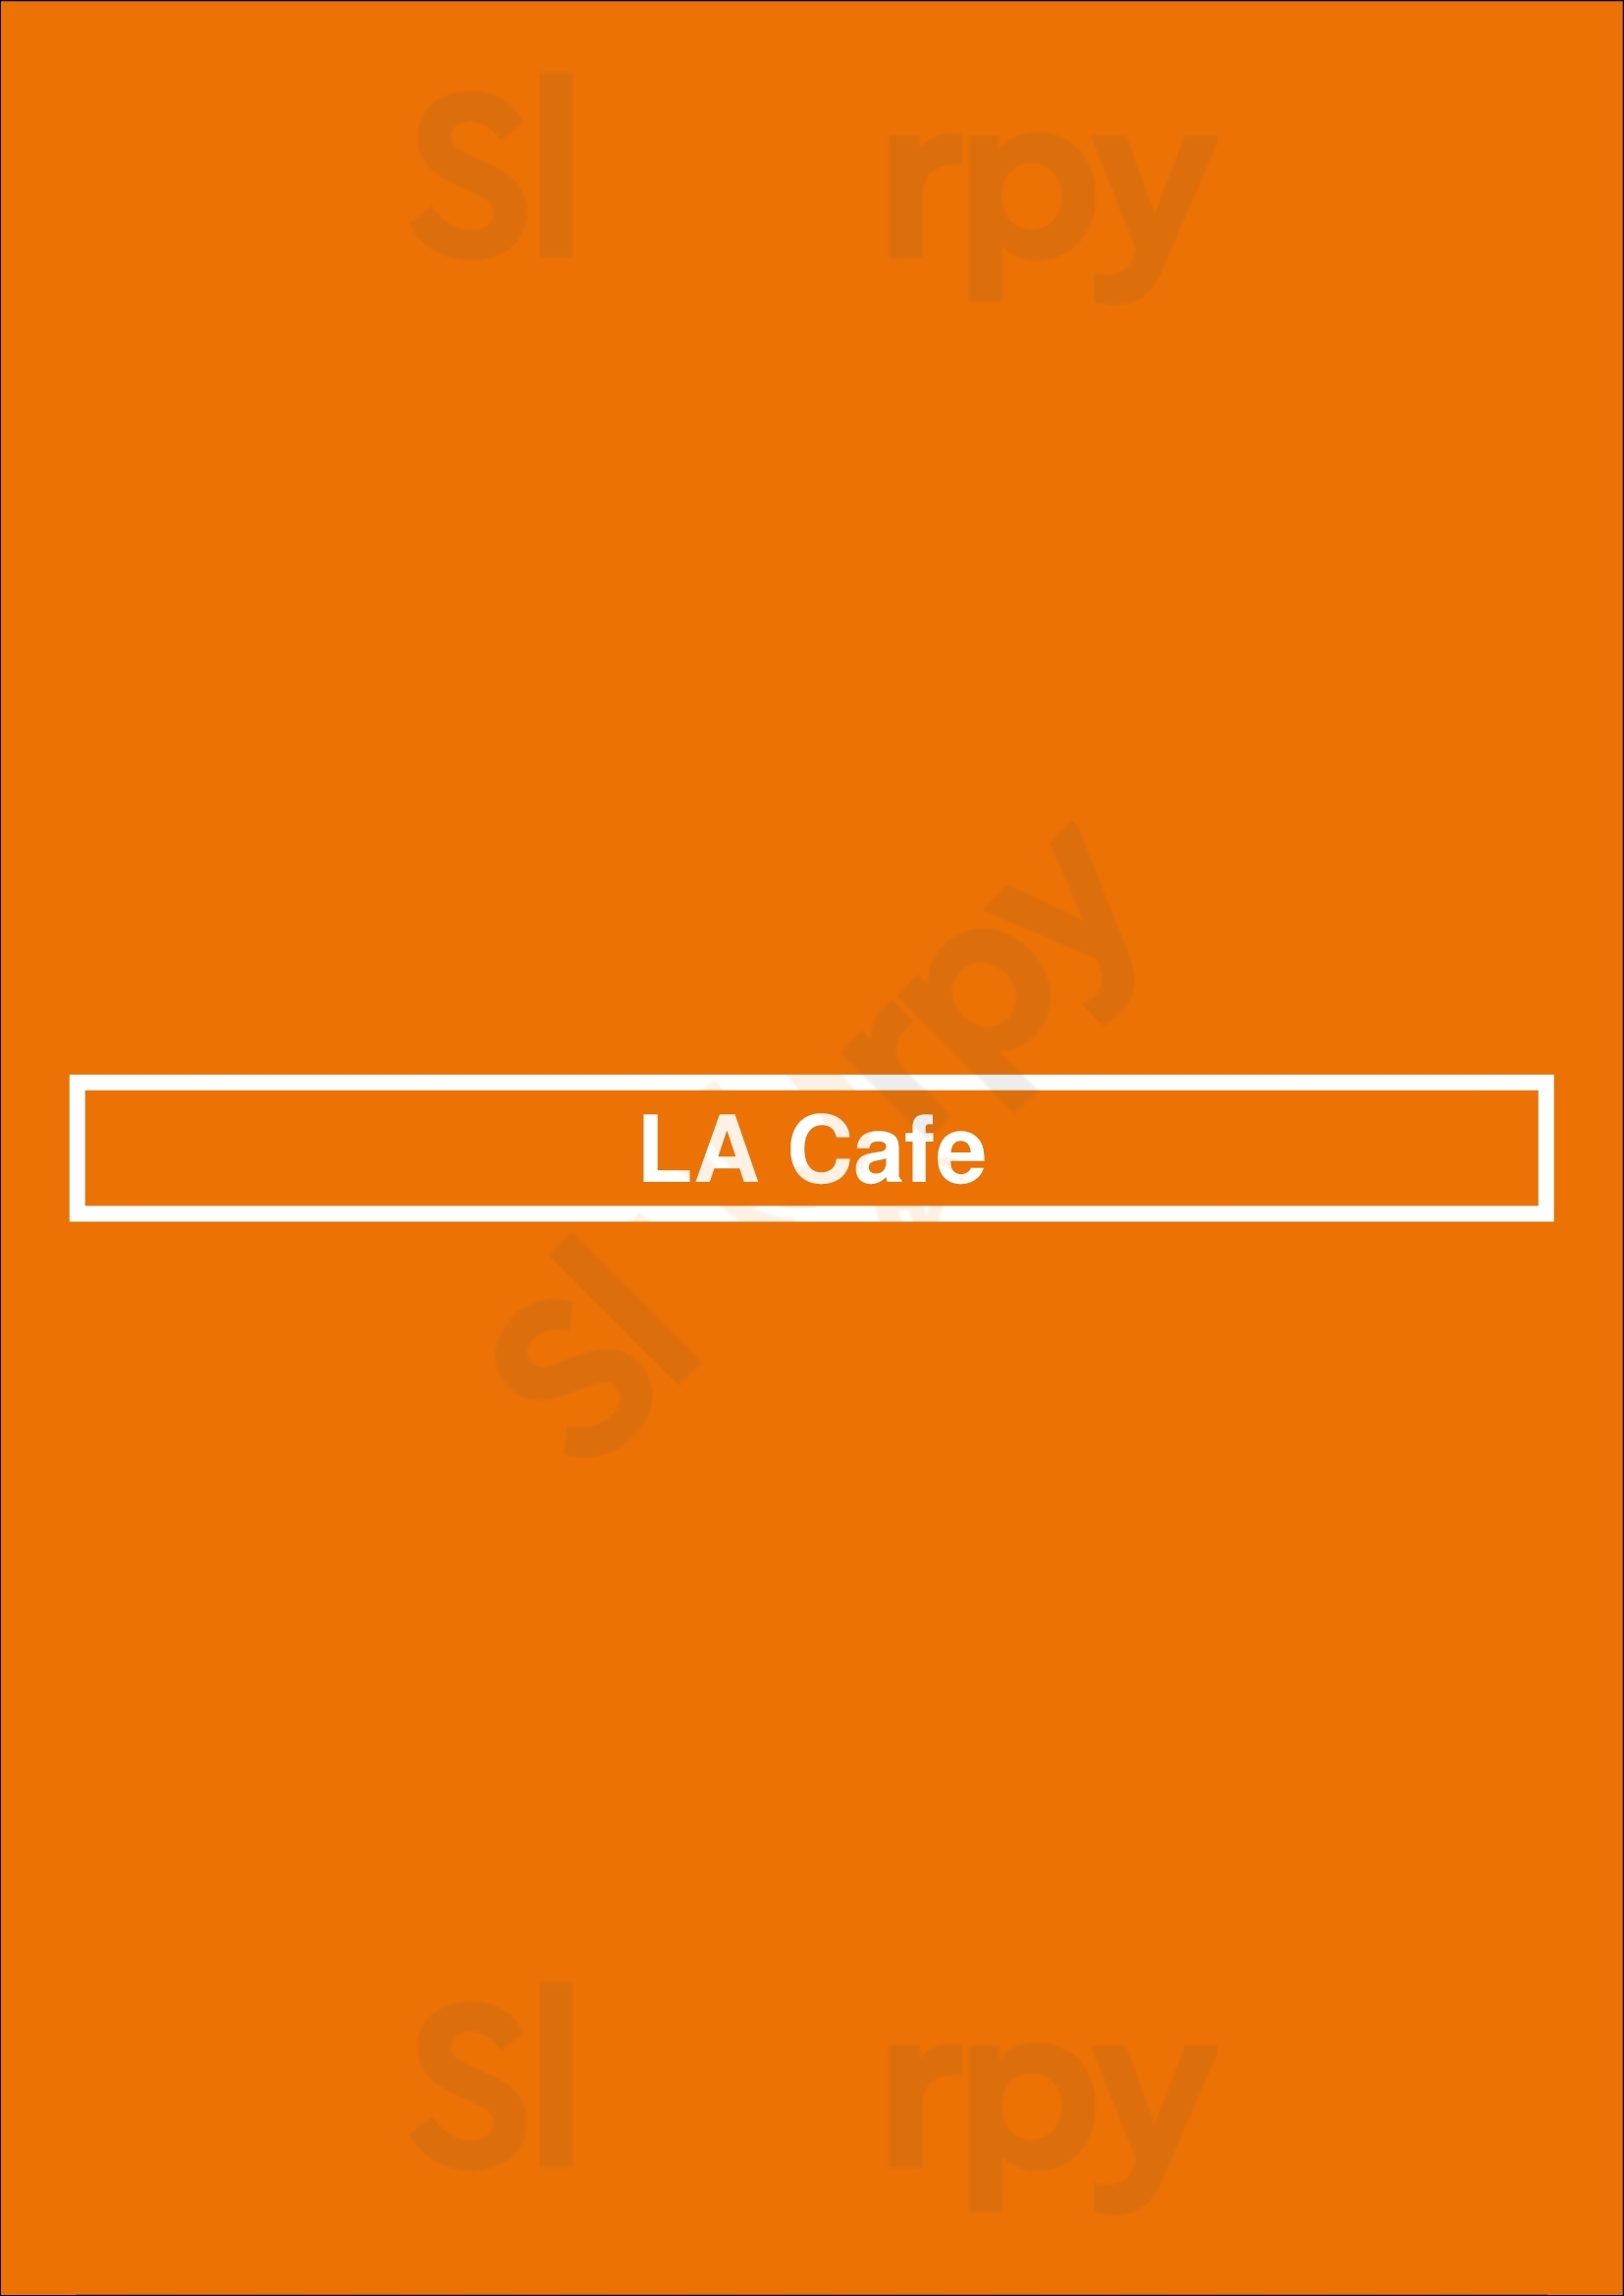 L.a. Cafe Los Angeles Menu - 1